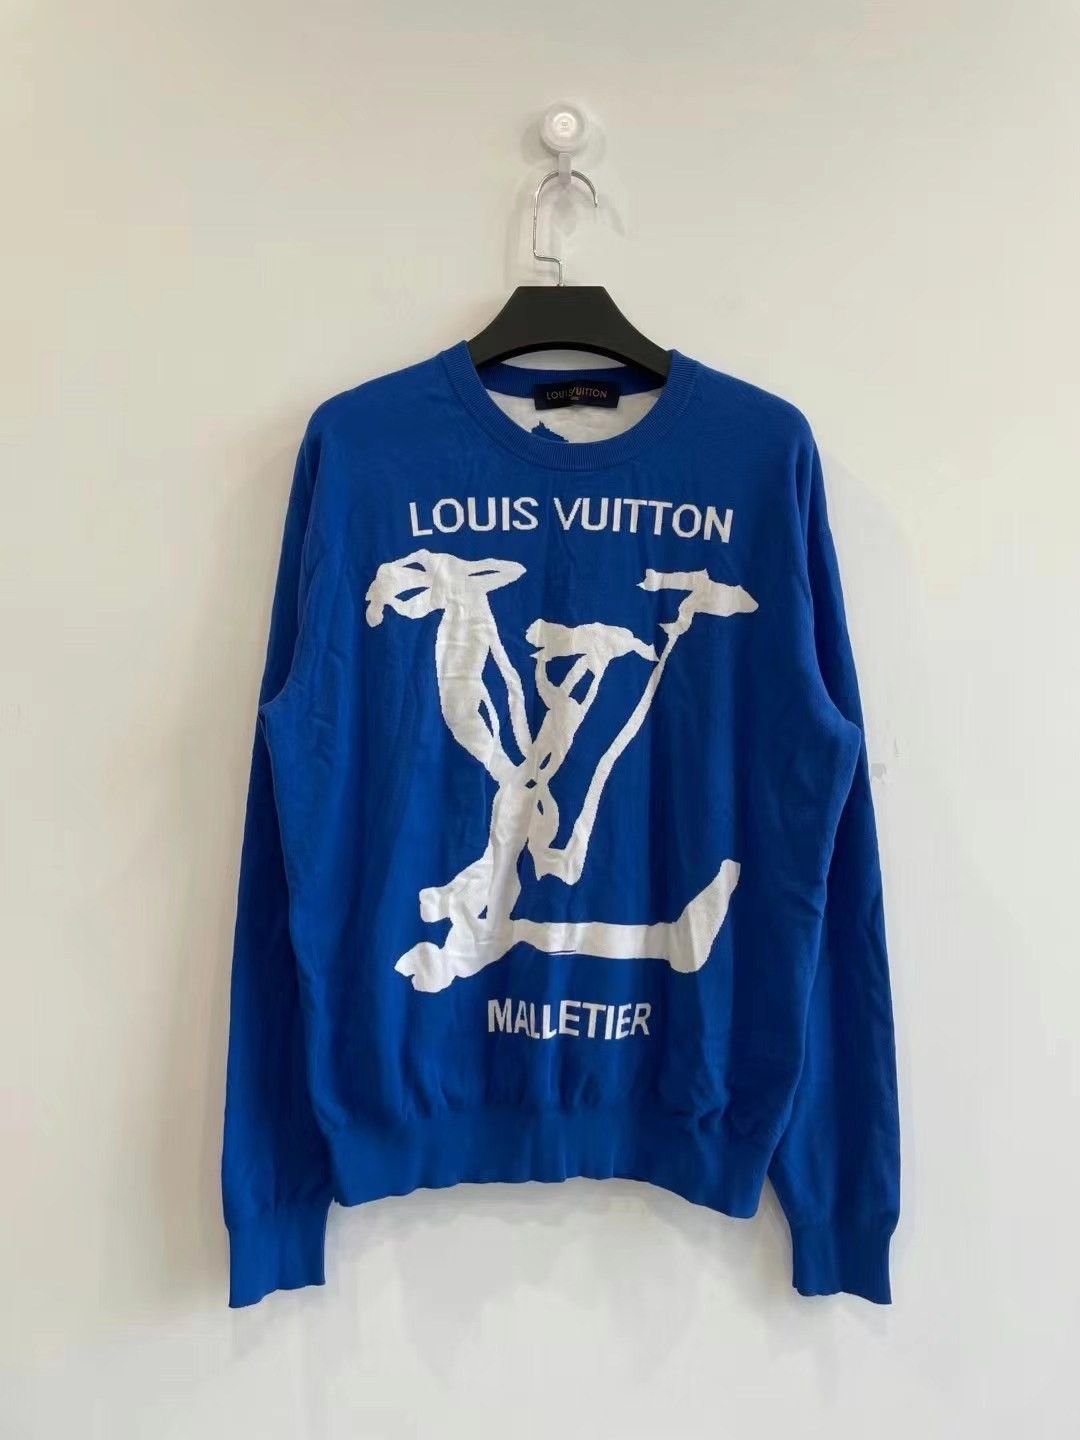 Louis Vuitton Malletier Clouds Crewneck Sweater - Authentic Luxury